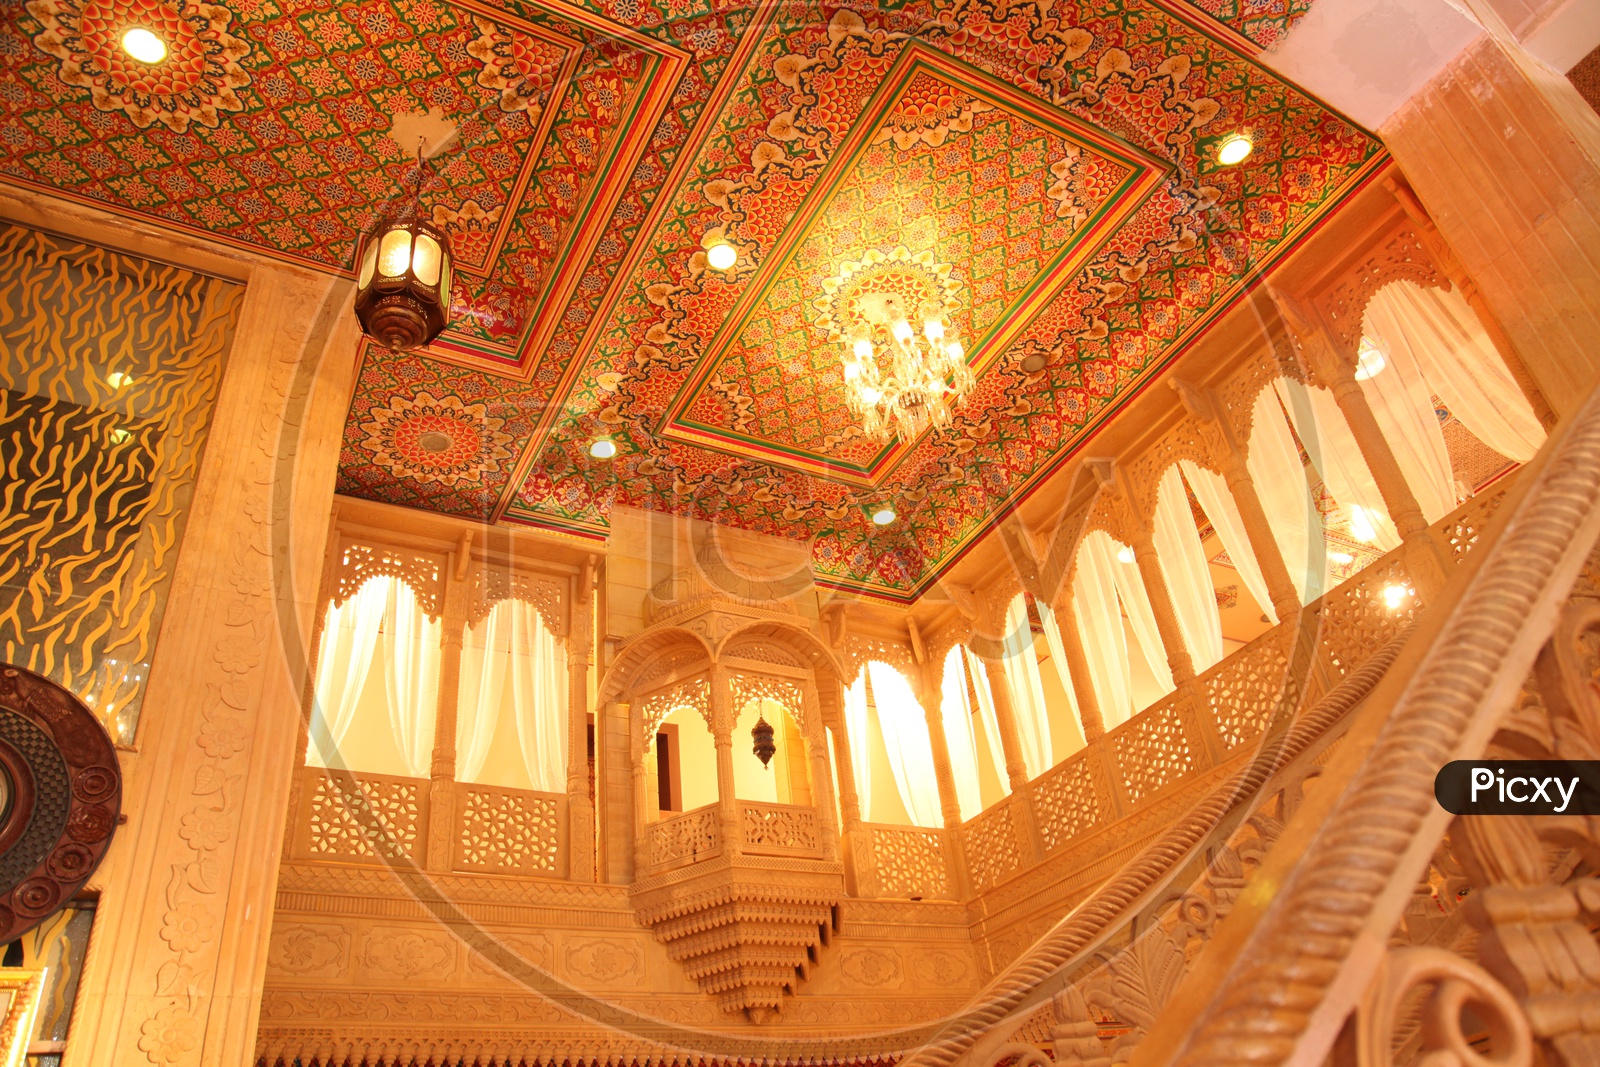 Interior design of a palace